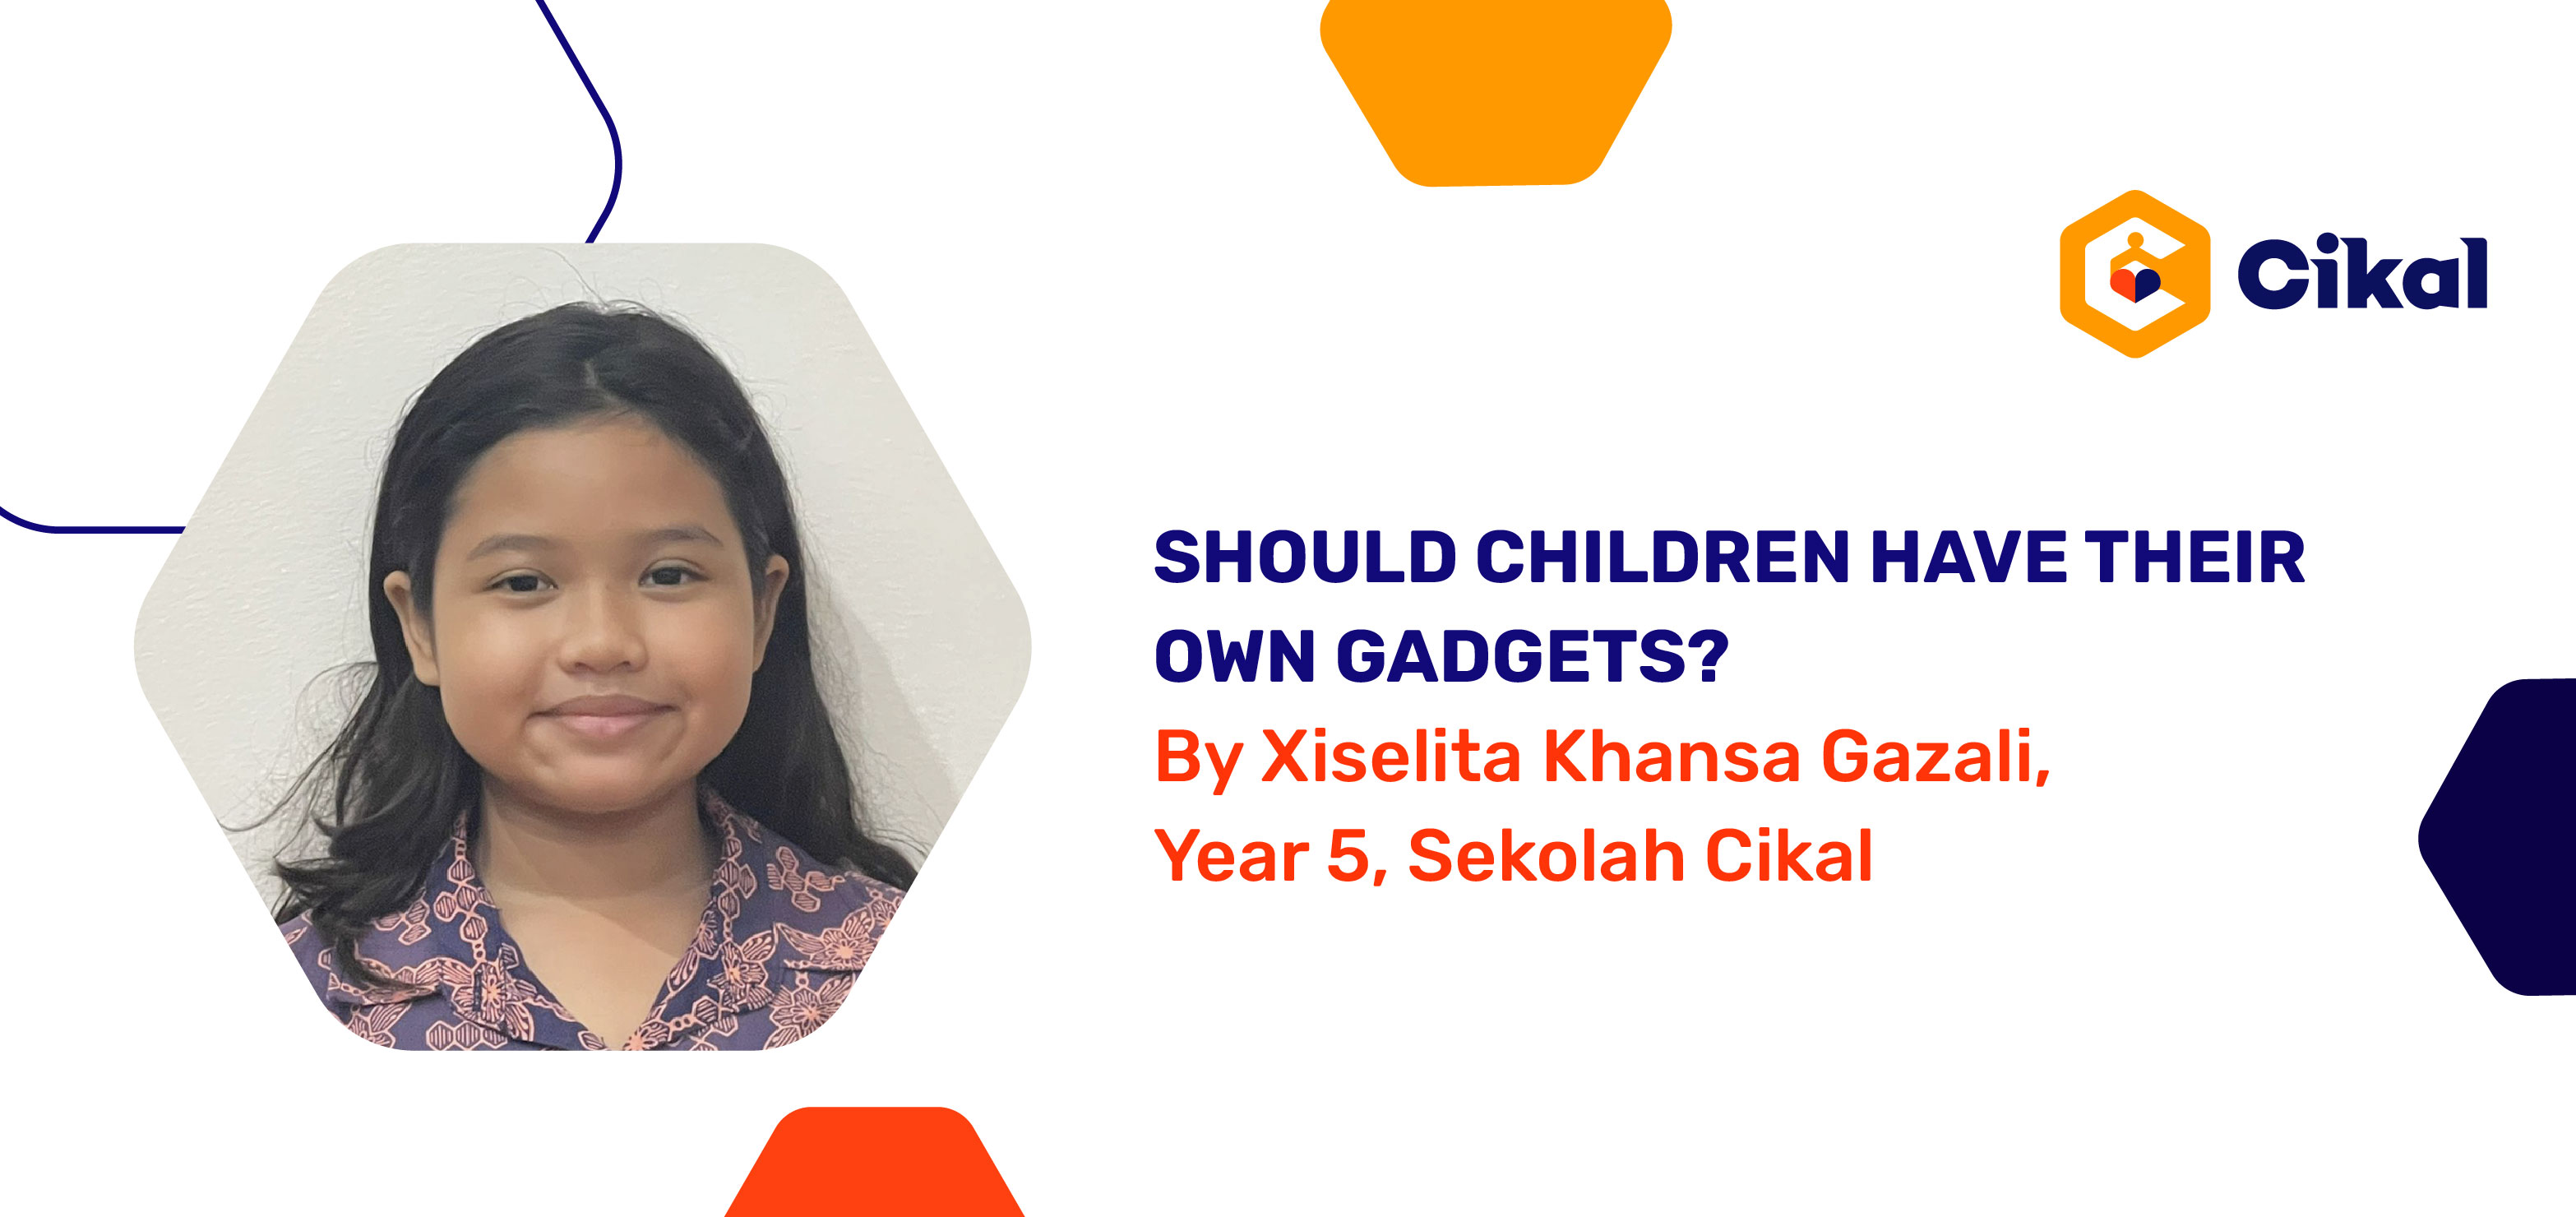 Should Children Have Their Own Gadgets? By Xiselita Khansa Gazali, Year 5, Sekolah Cikal